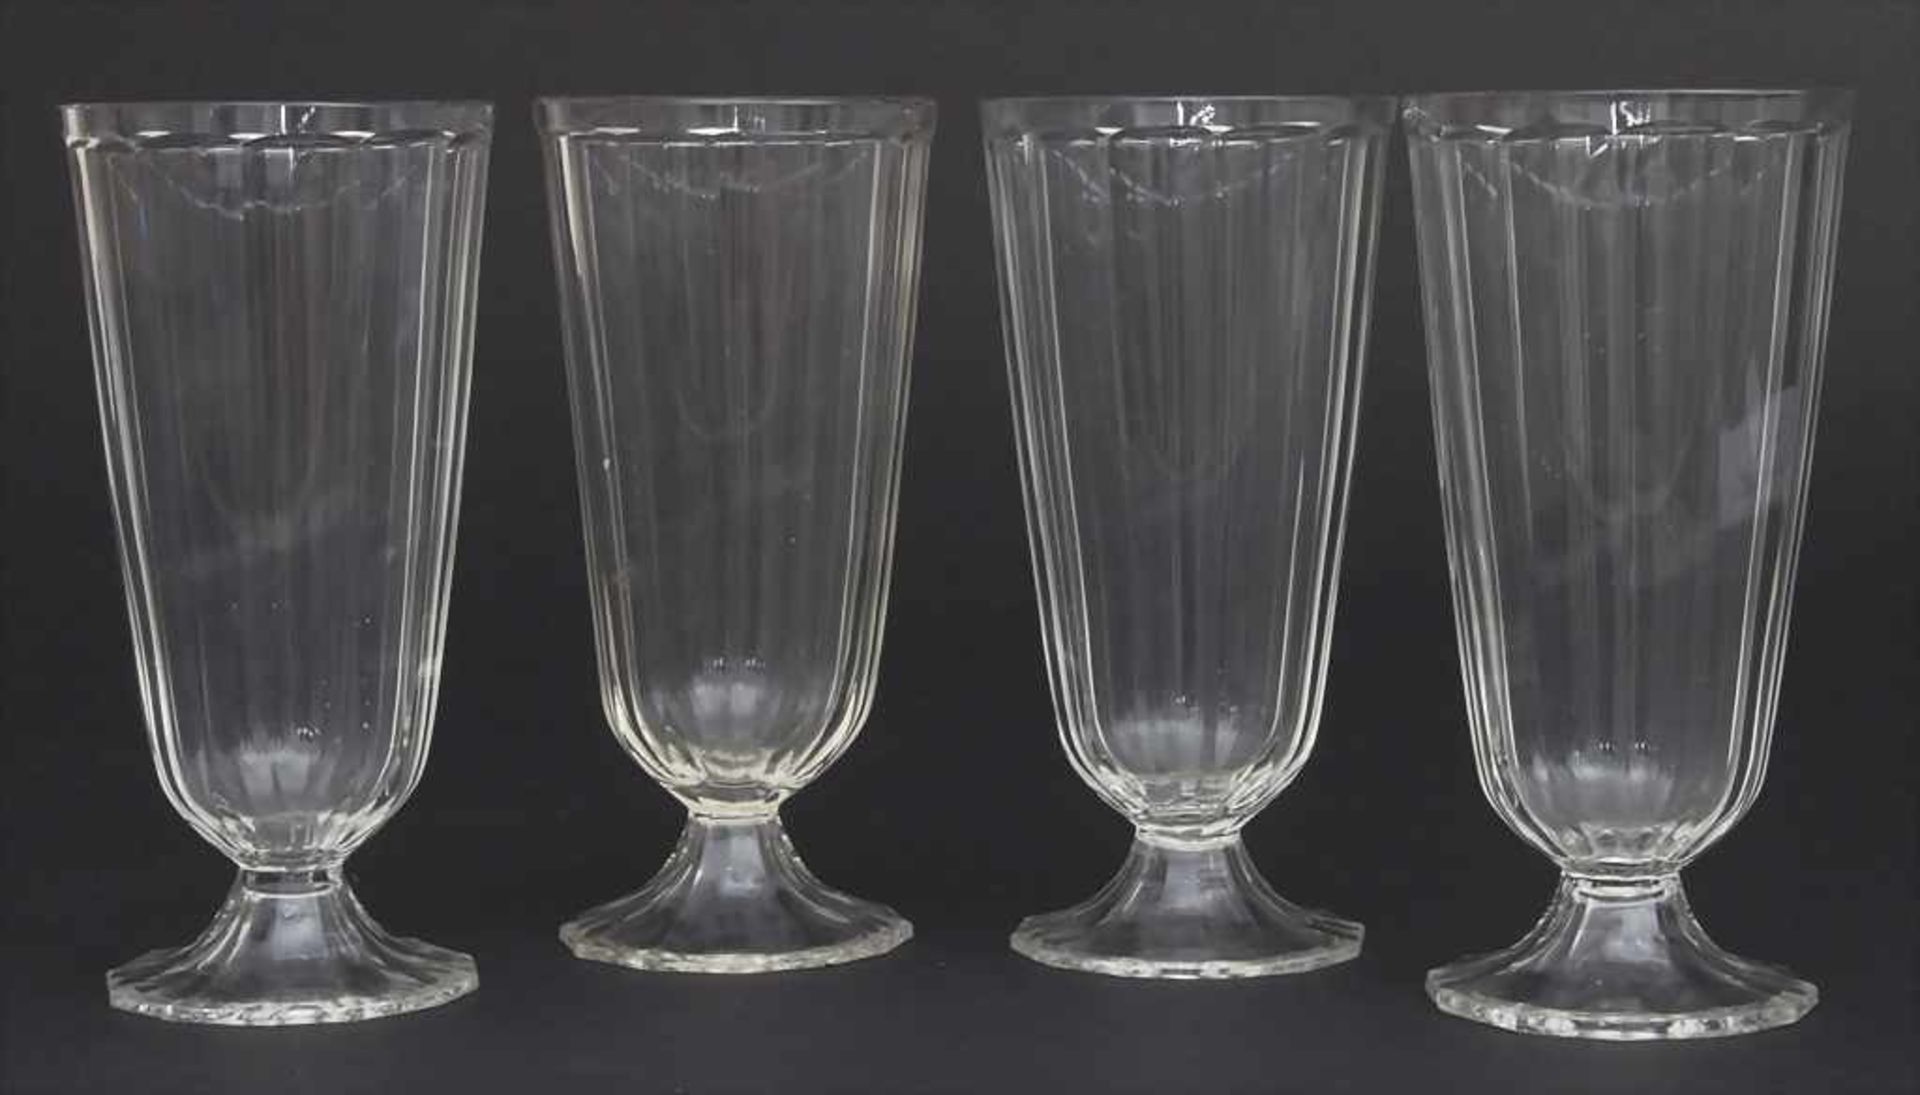 4 Biergläser / A set of 4 beer glasses, J. & L. Lobmeyr, Wien, um 1900